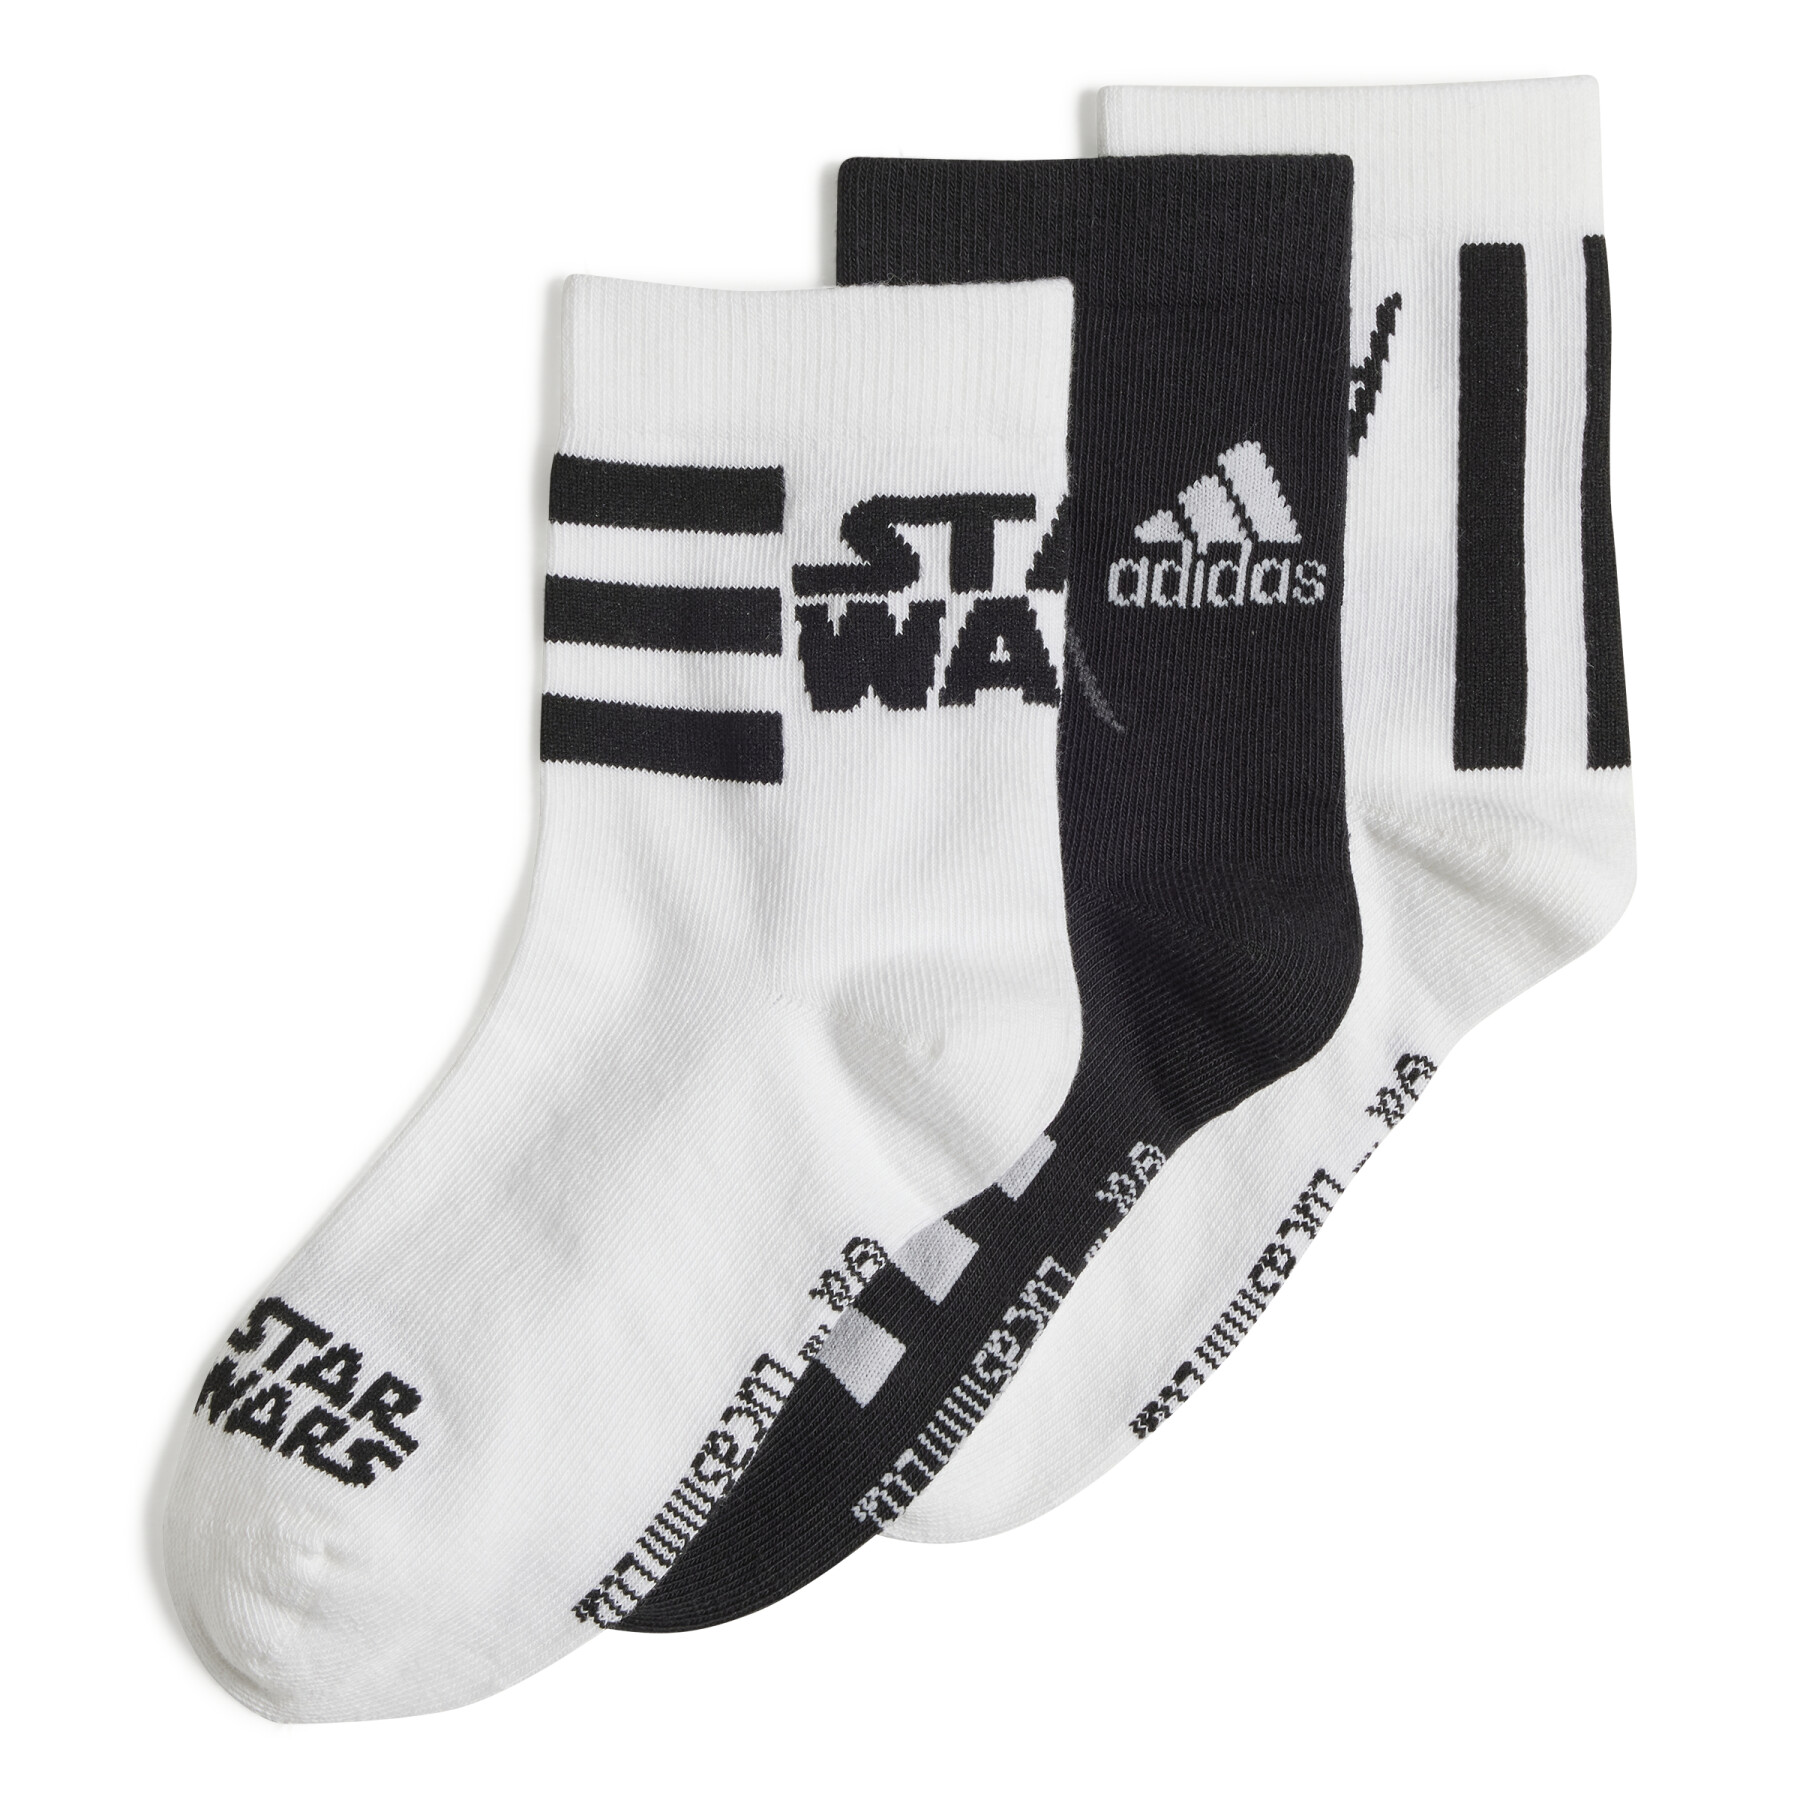 Children's socks adidas Star Wars (x3)